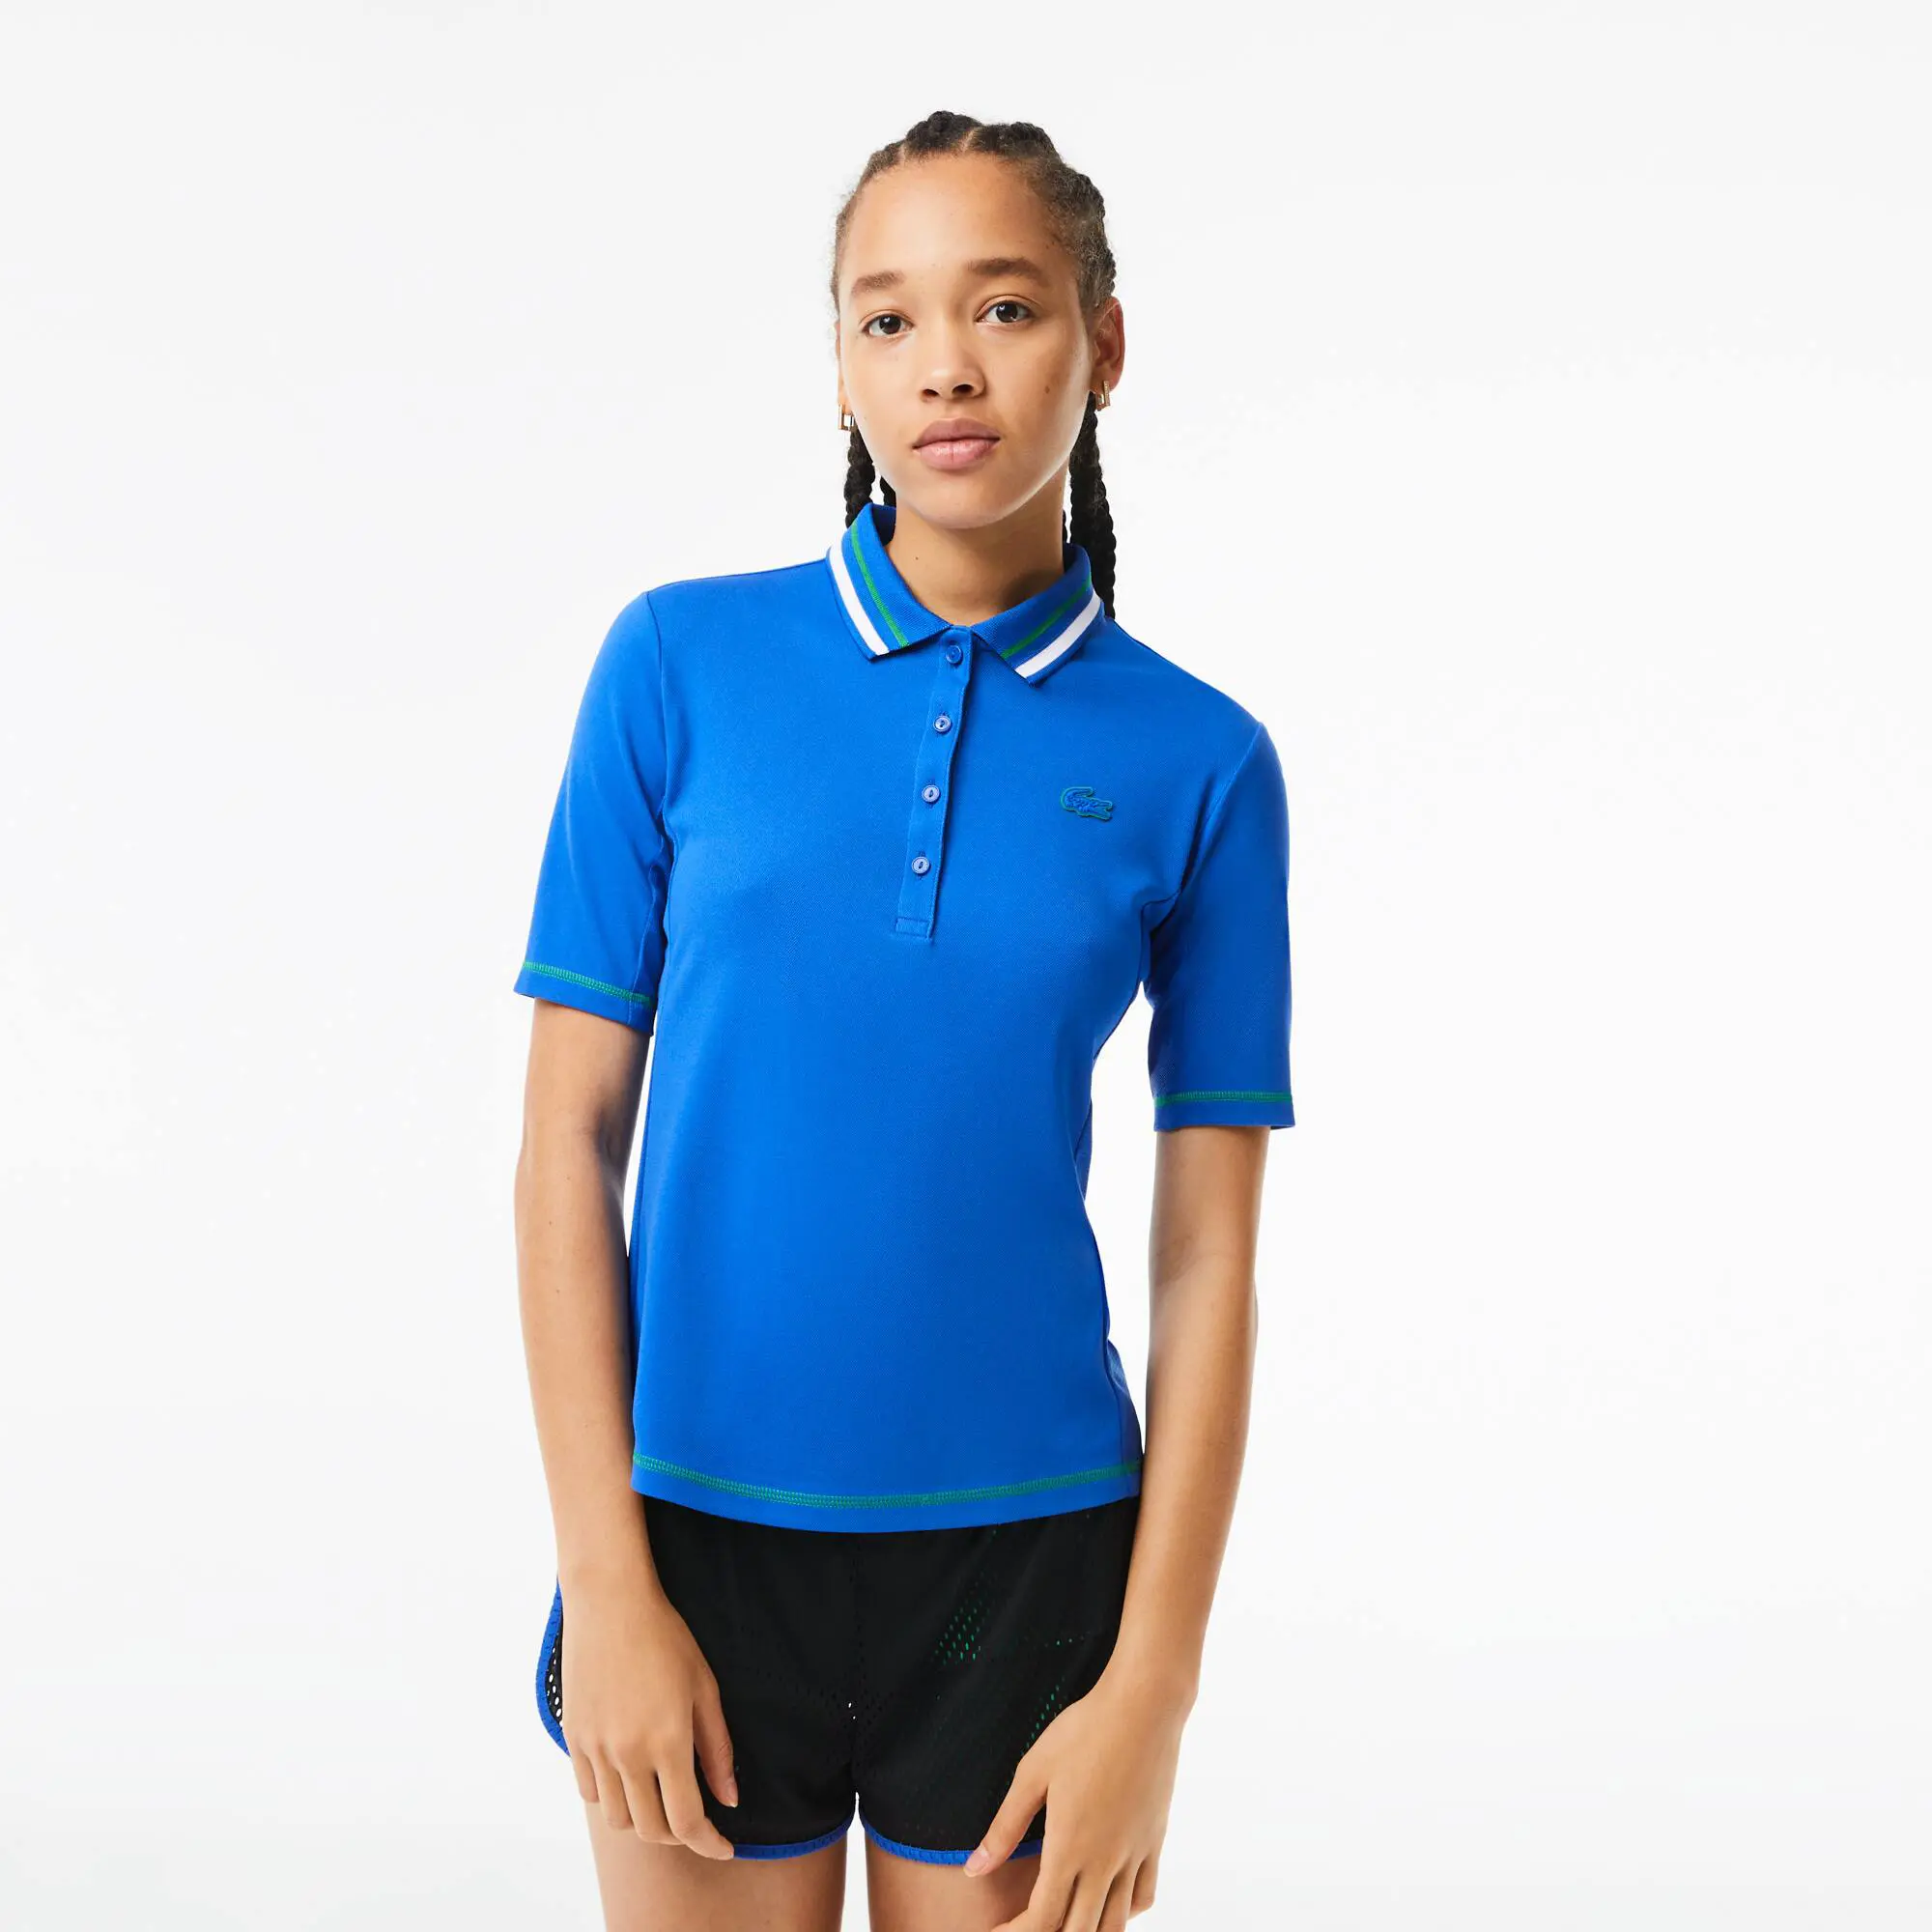 Lacoste Women’s Lacoste Tennis Ultra-dry Pique Polo Shirt. 1